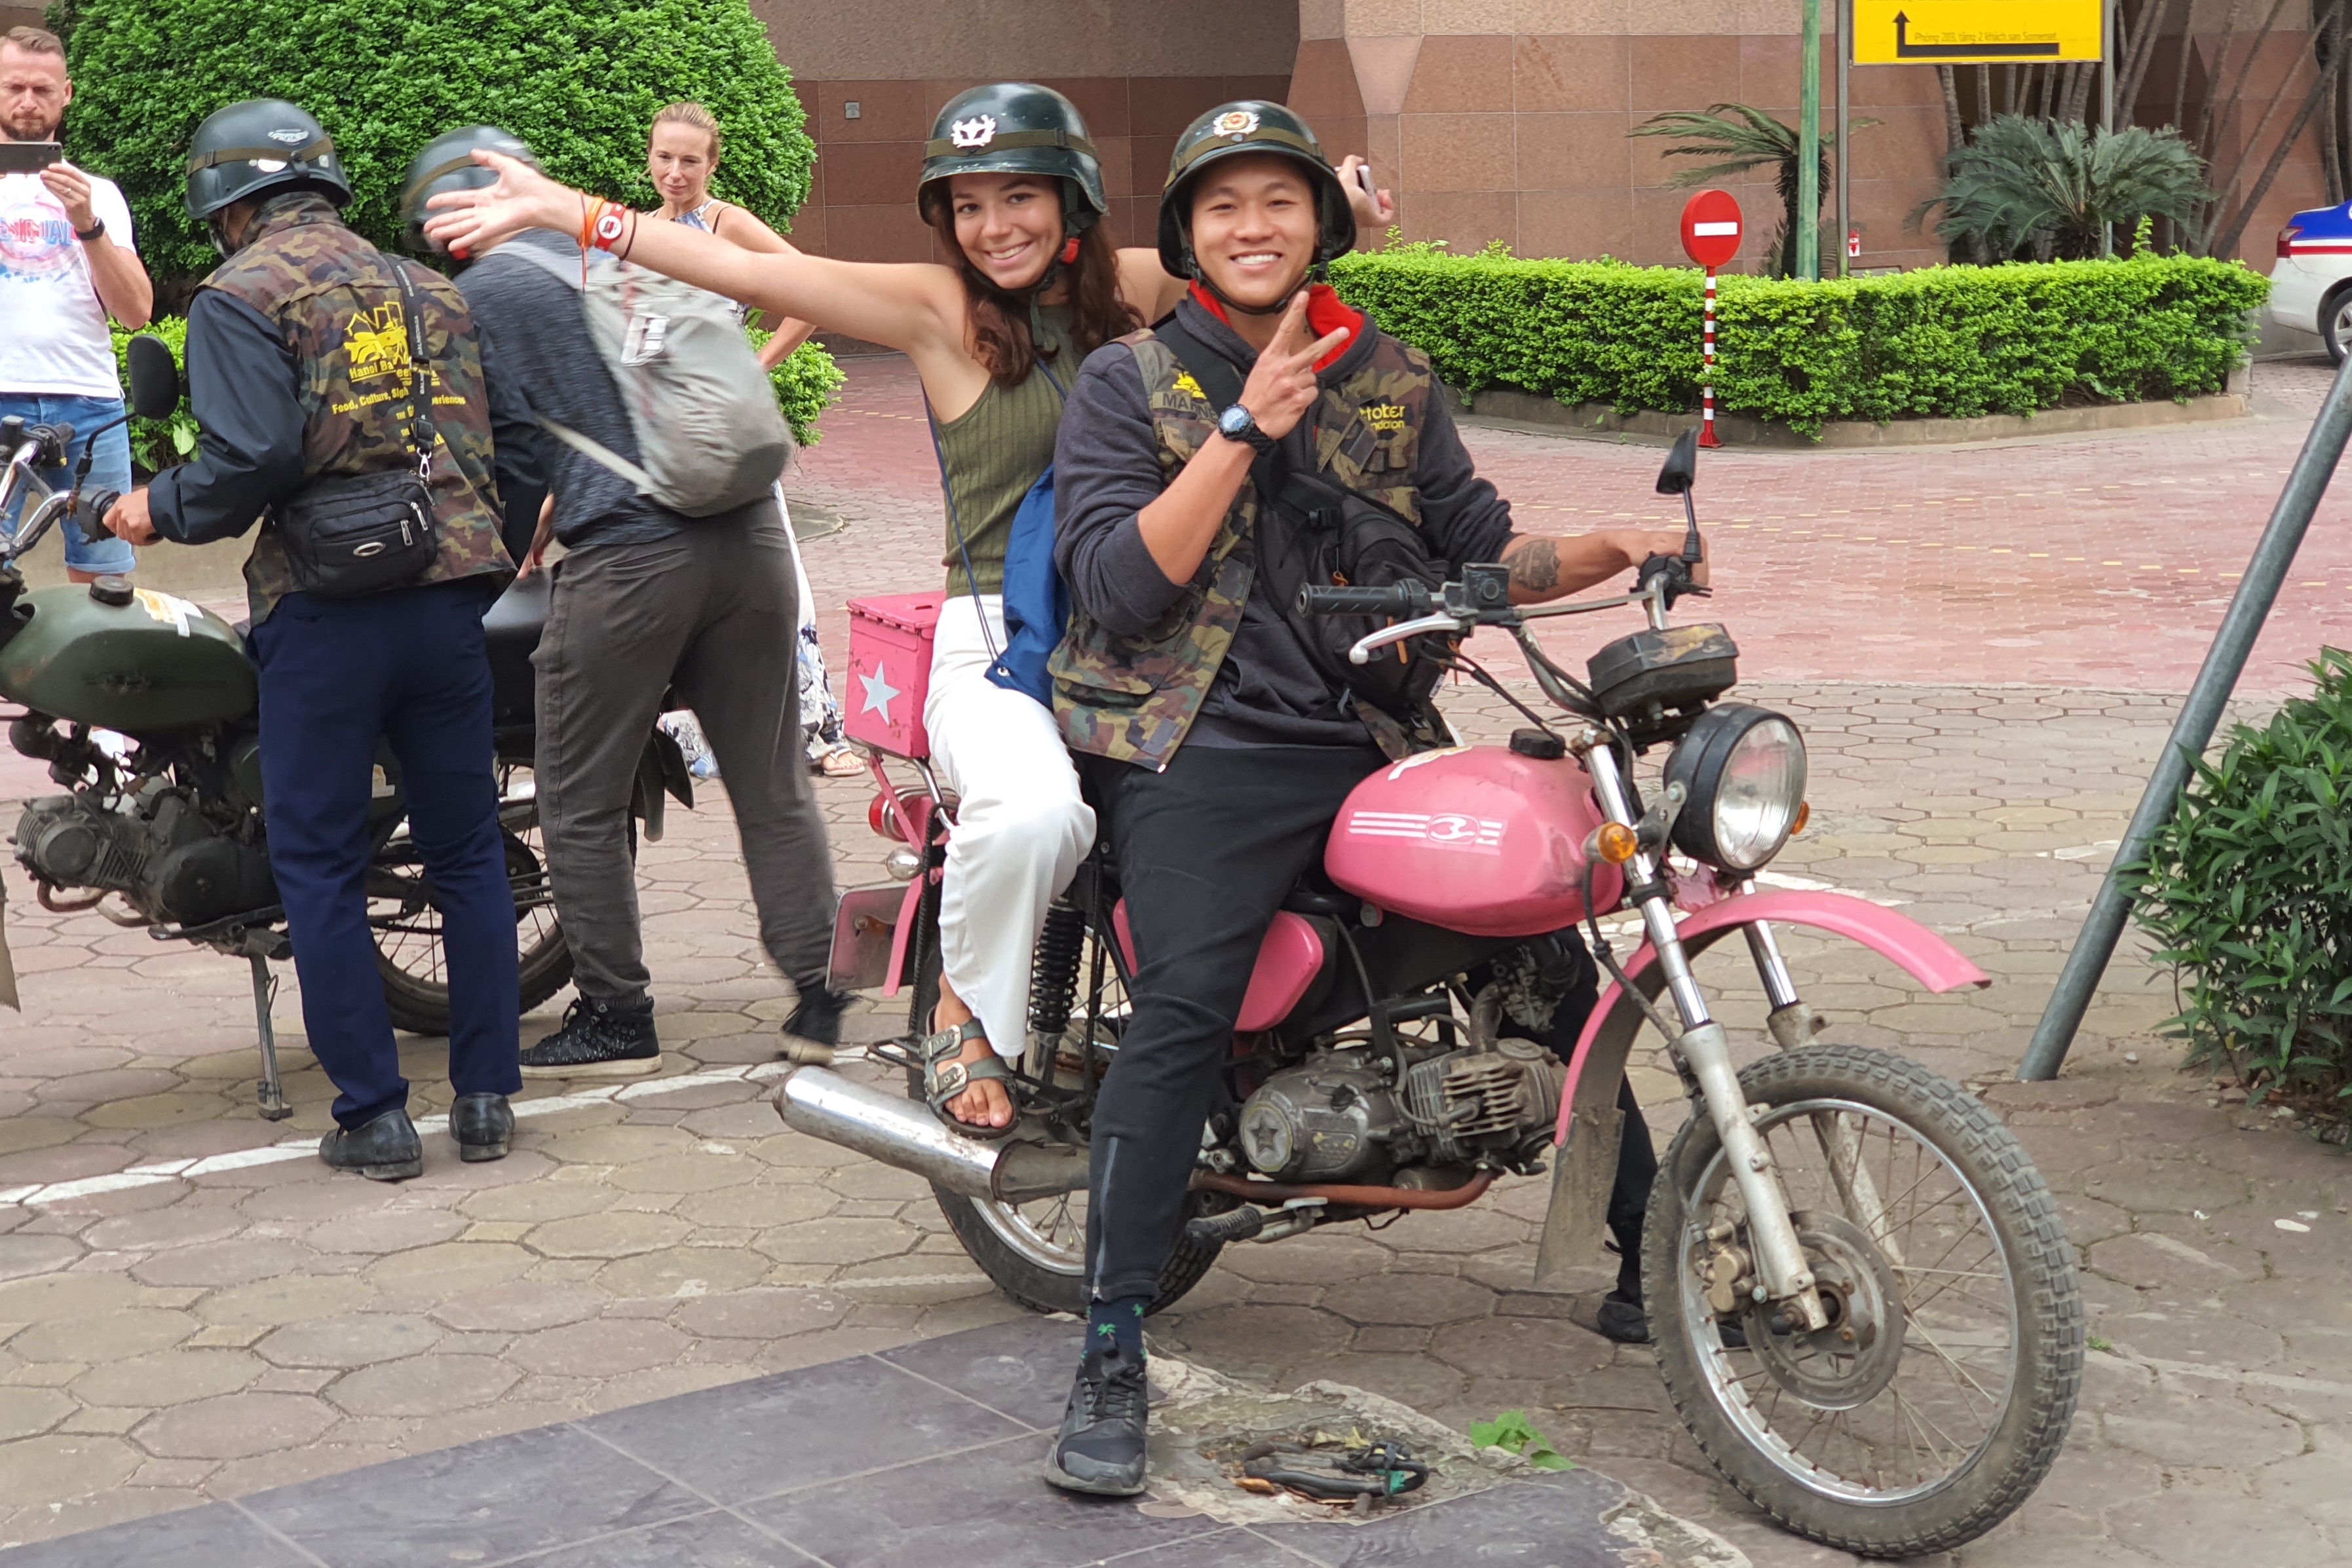 Hanoi Motorbike Tours